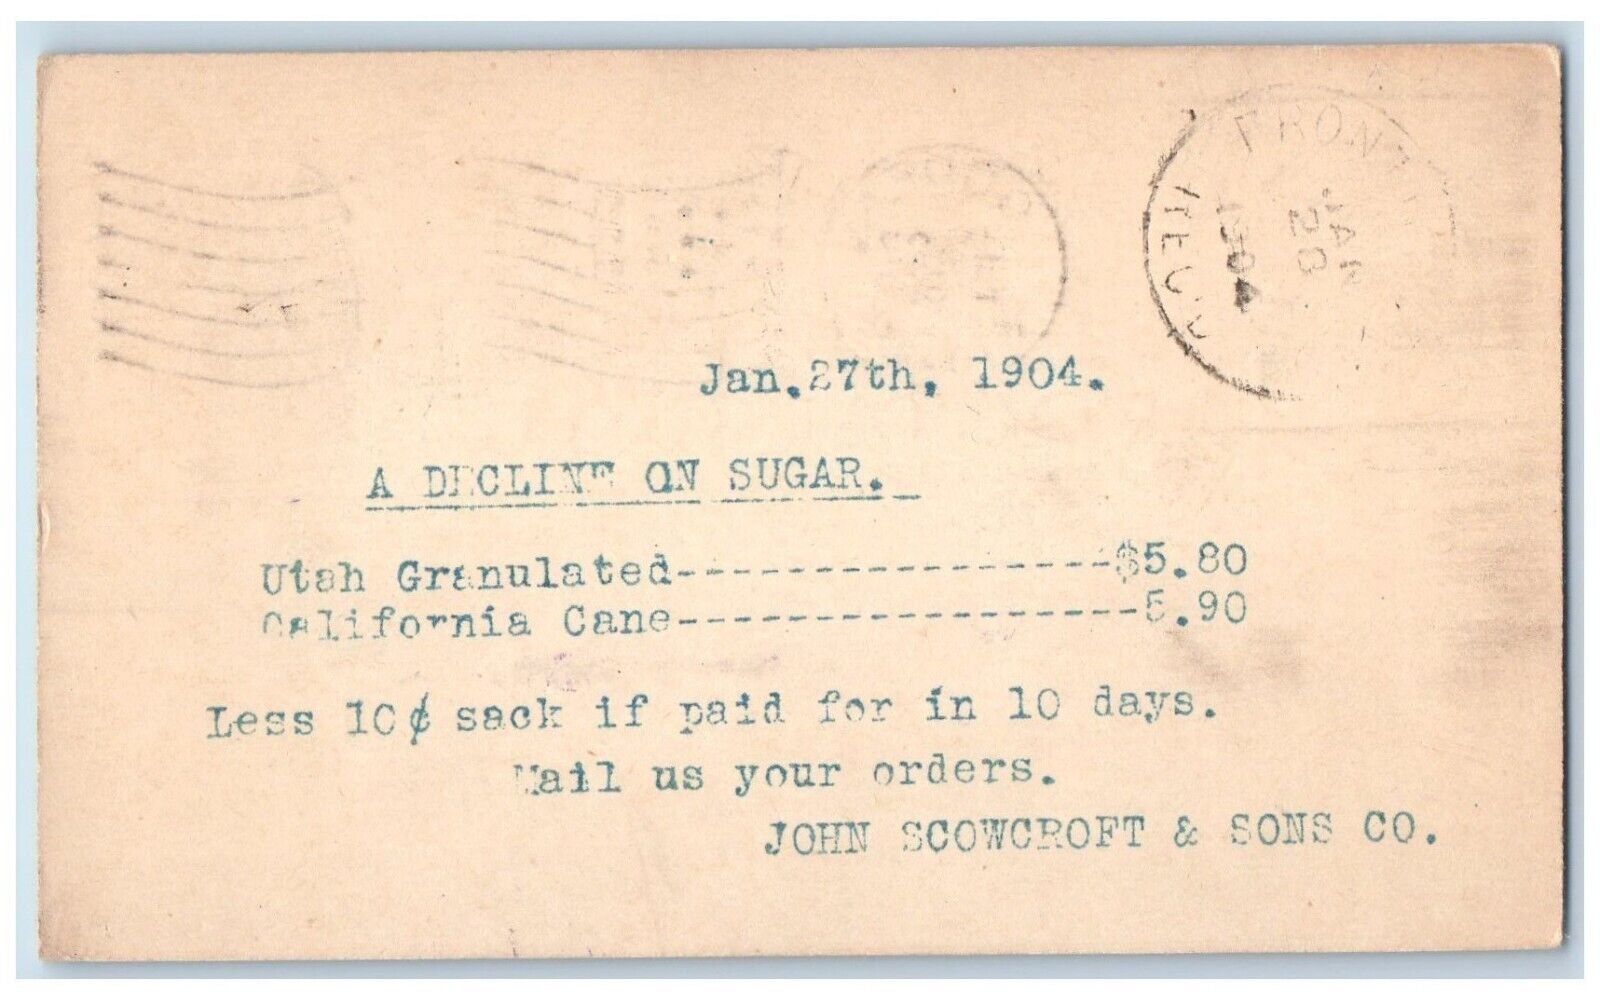 1904 A Decline On Sugar John Scowcroft & Sons Co. Ogden Utah UT Postal Card